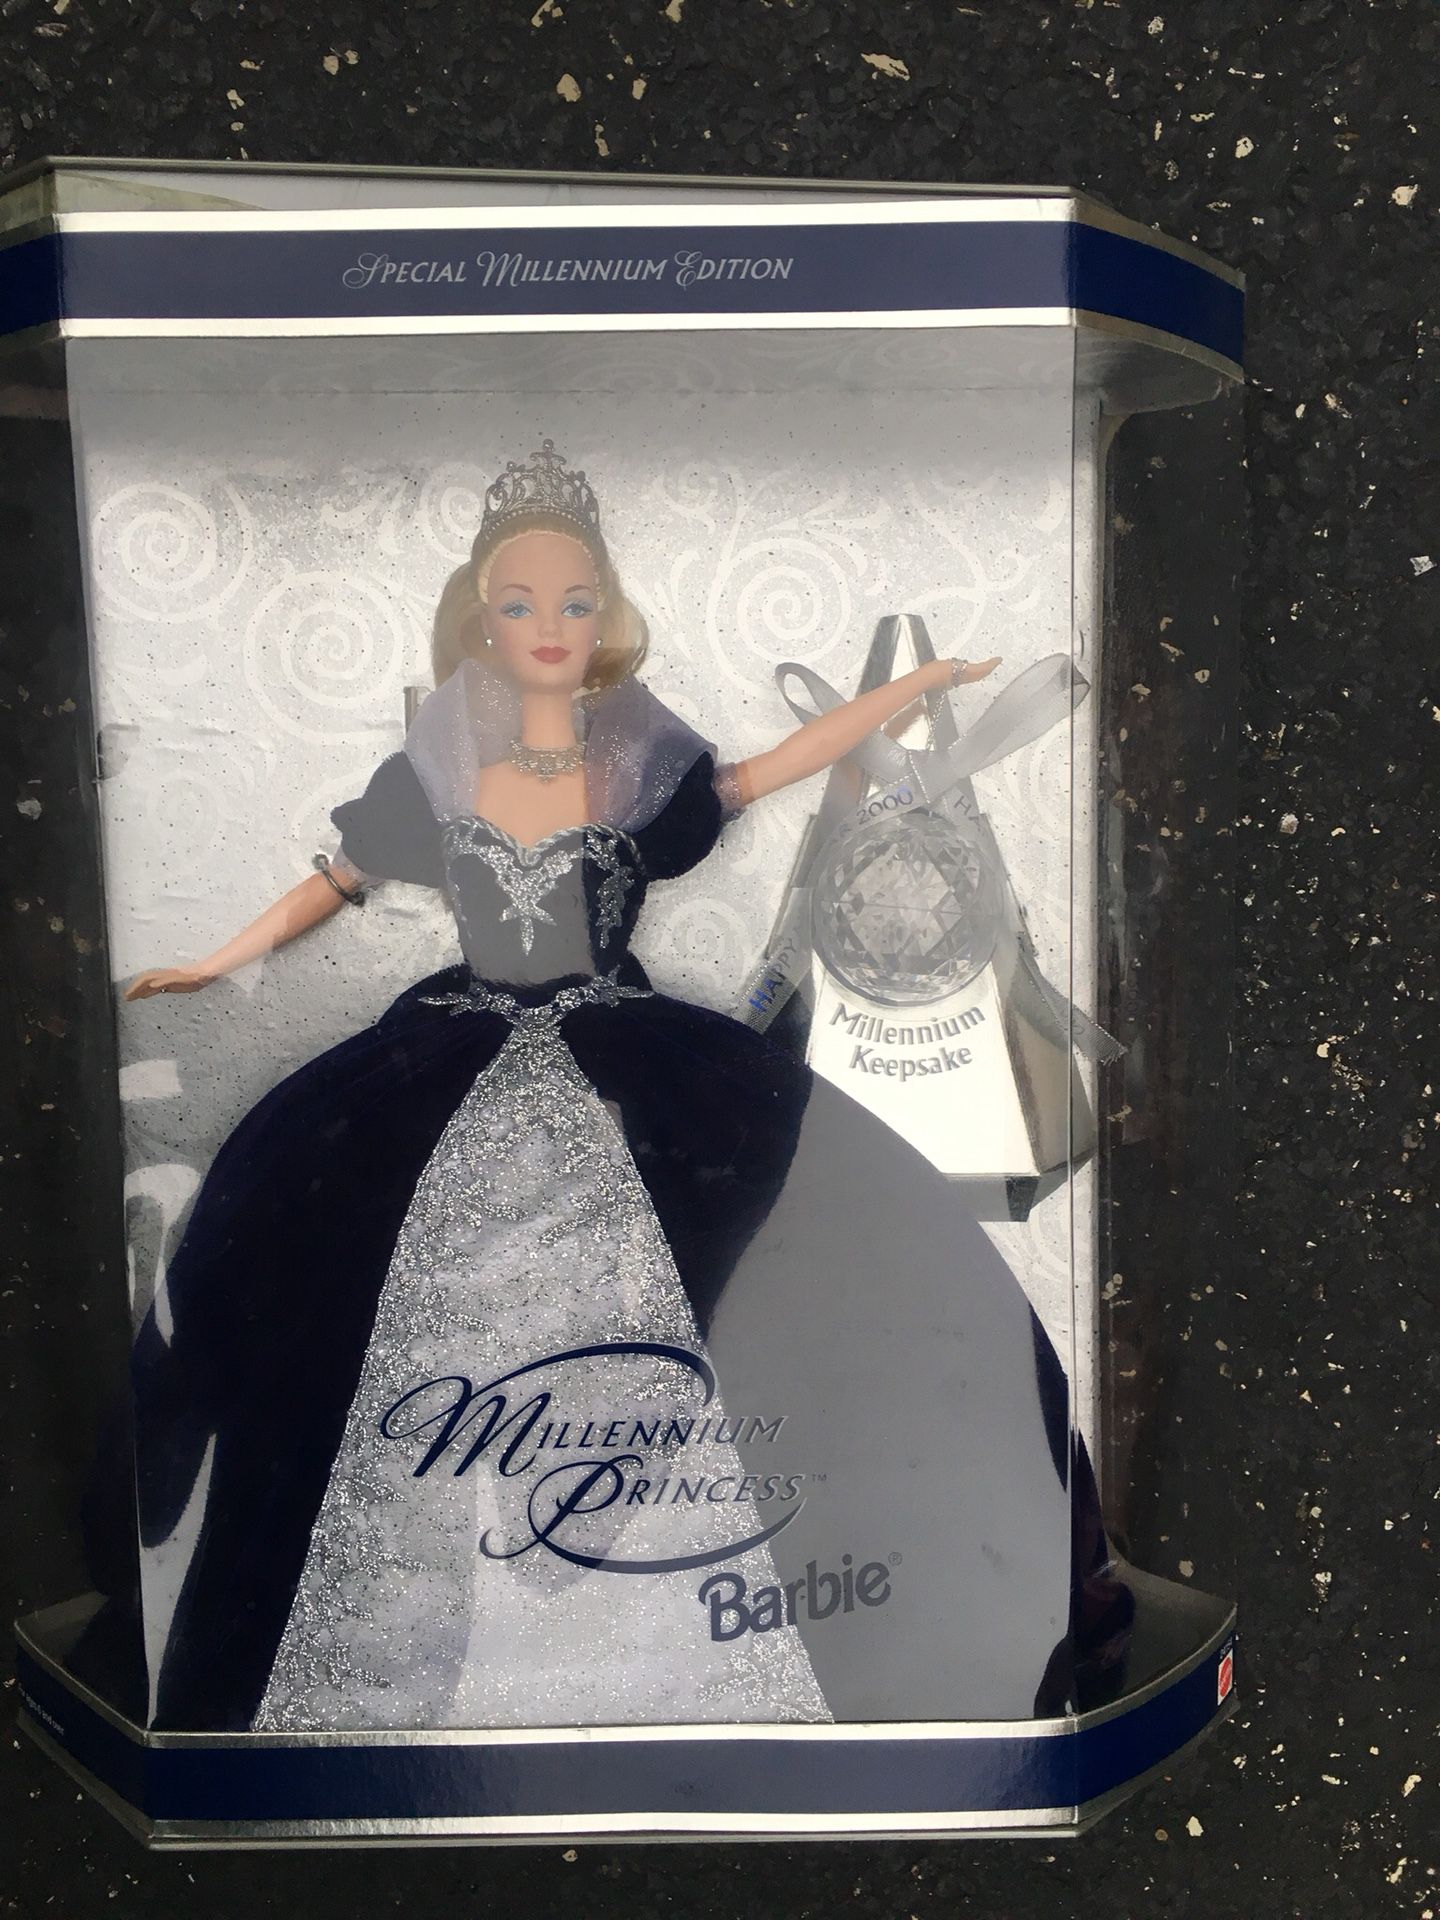 Millennium princess Barbie with millennium keepsake